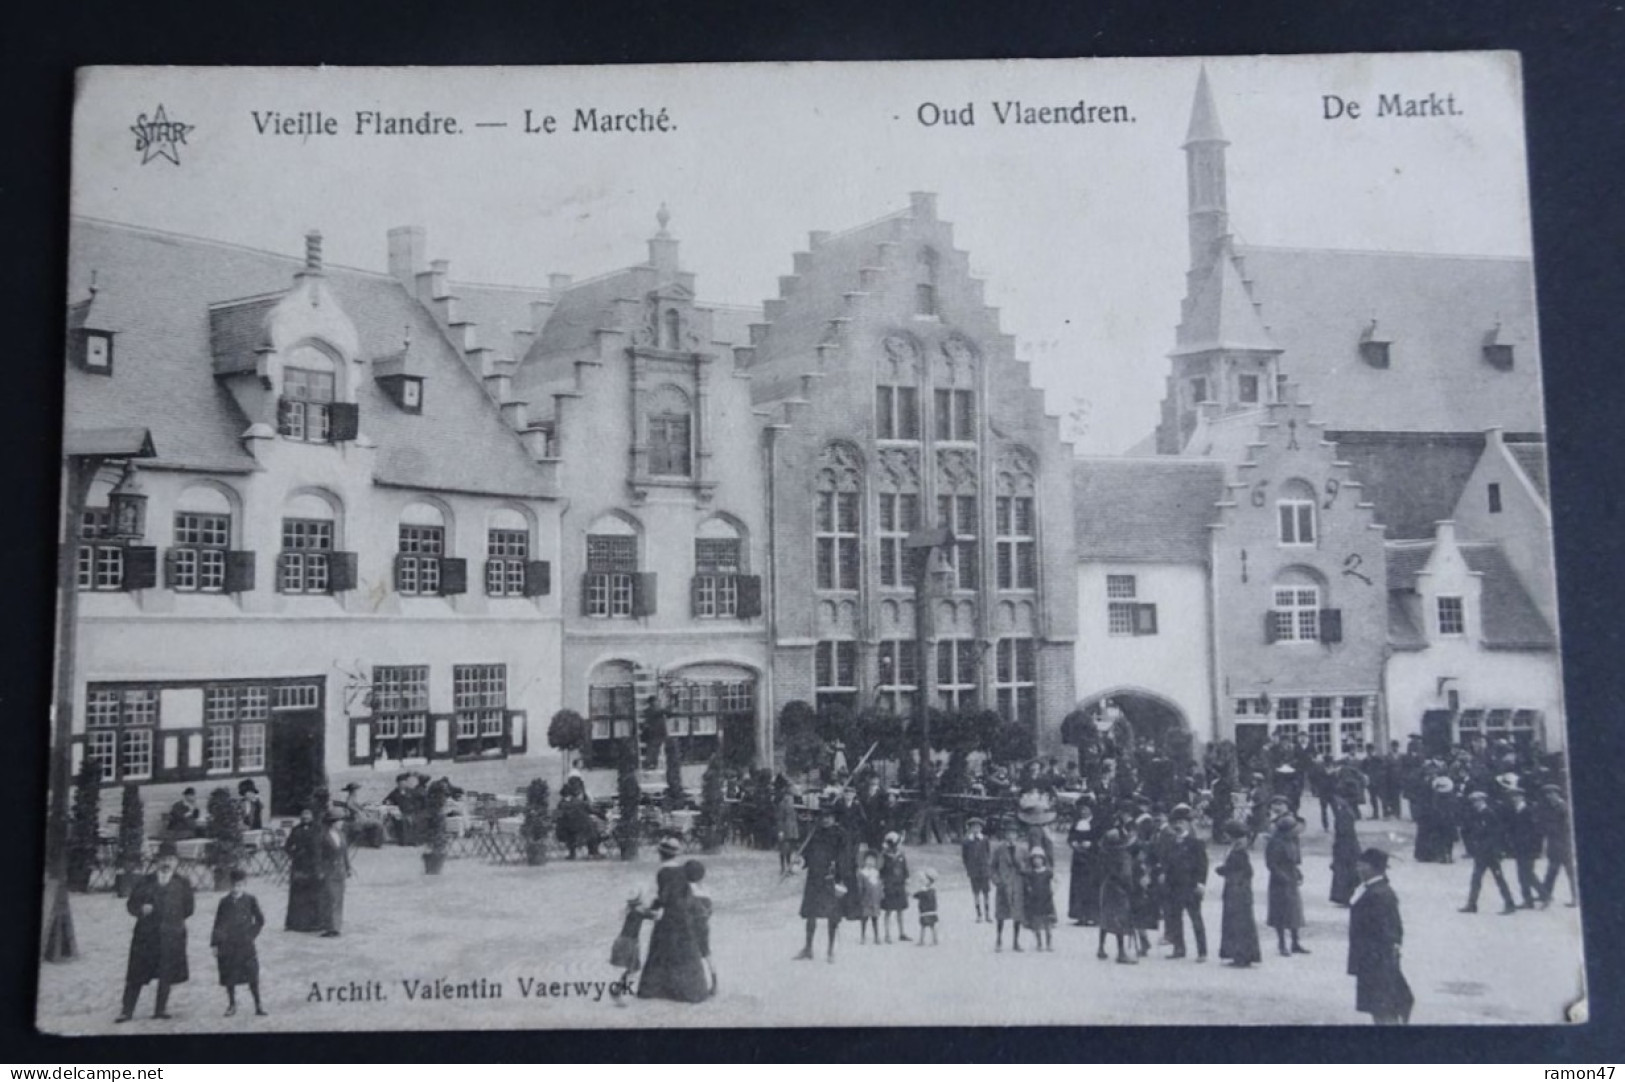 Vieille Flandre, Le Marché - Oud Vlaendren, De Markt  -  Archit. Valentin Vaerwyck - Ausstellungen